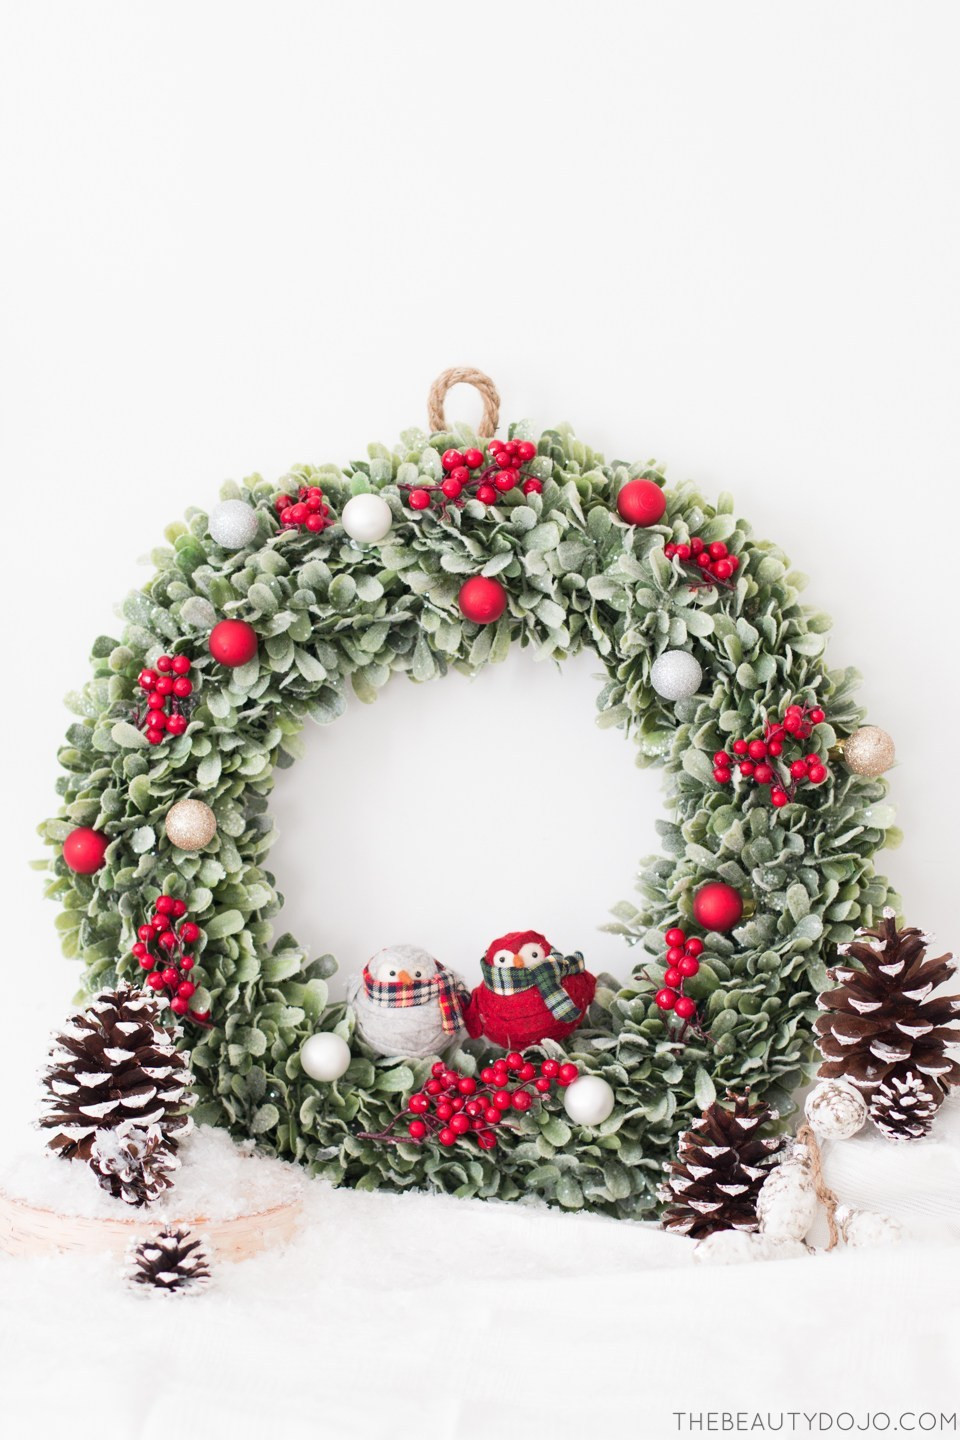 Best ideas about Christmas Wreaths DIY
. Save or Pin DIY Christmas Wreath The Beautydojo Now.